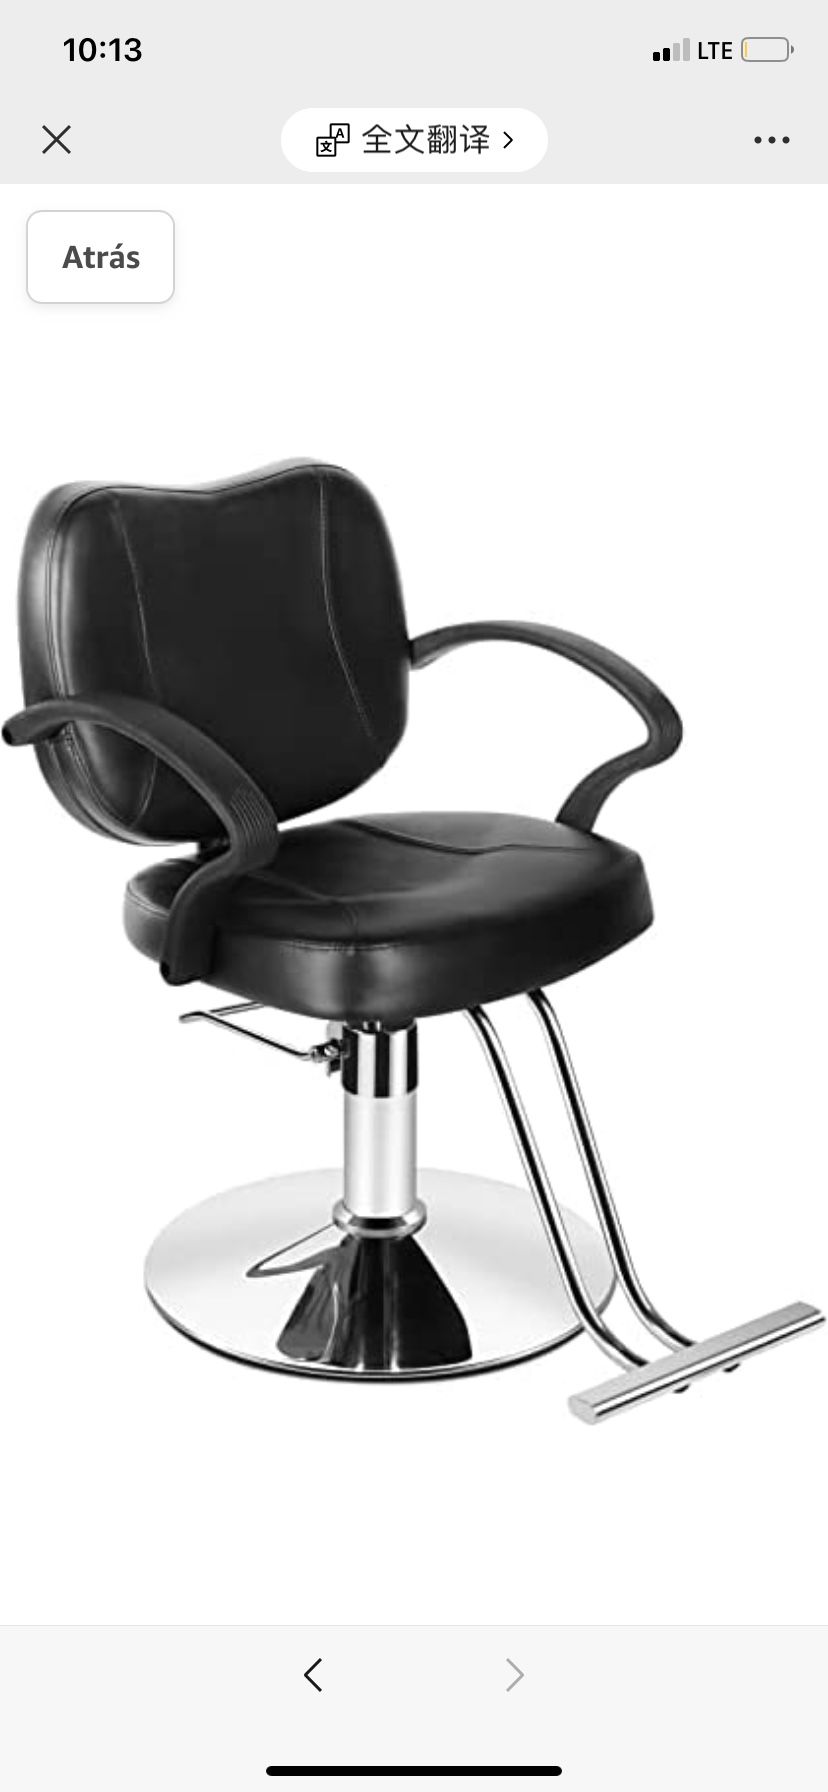 Hairdresser's hand-held hairdressing chair